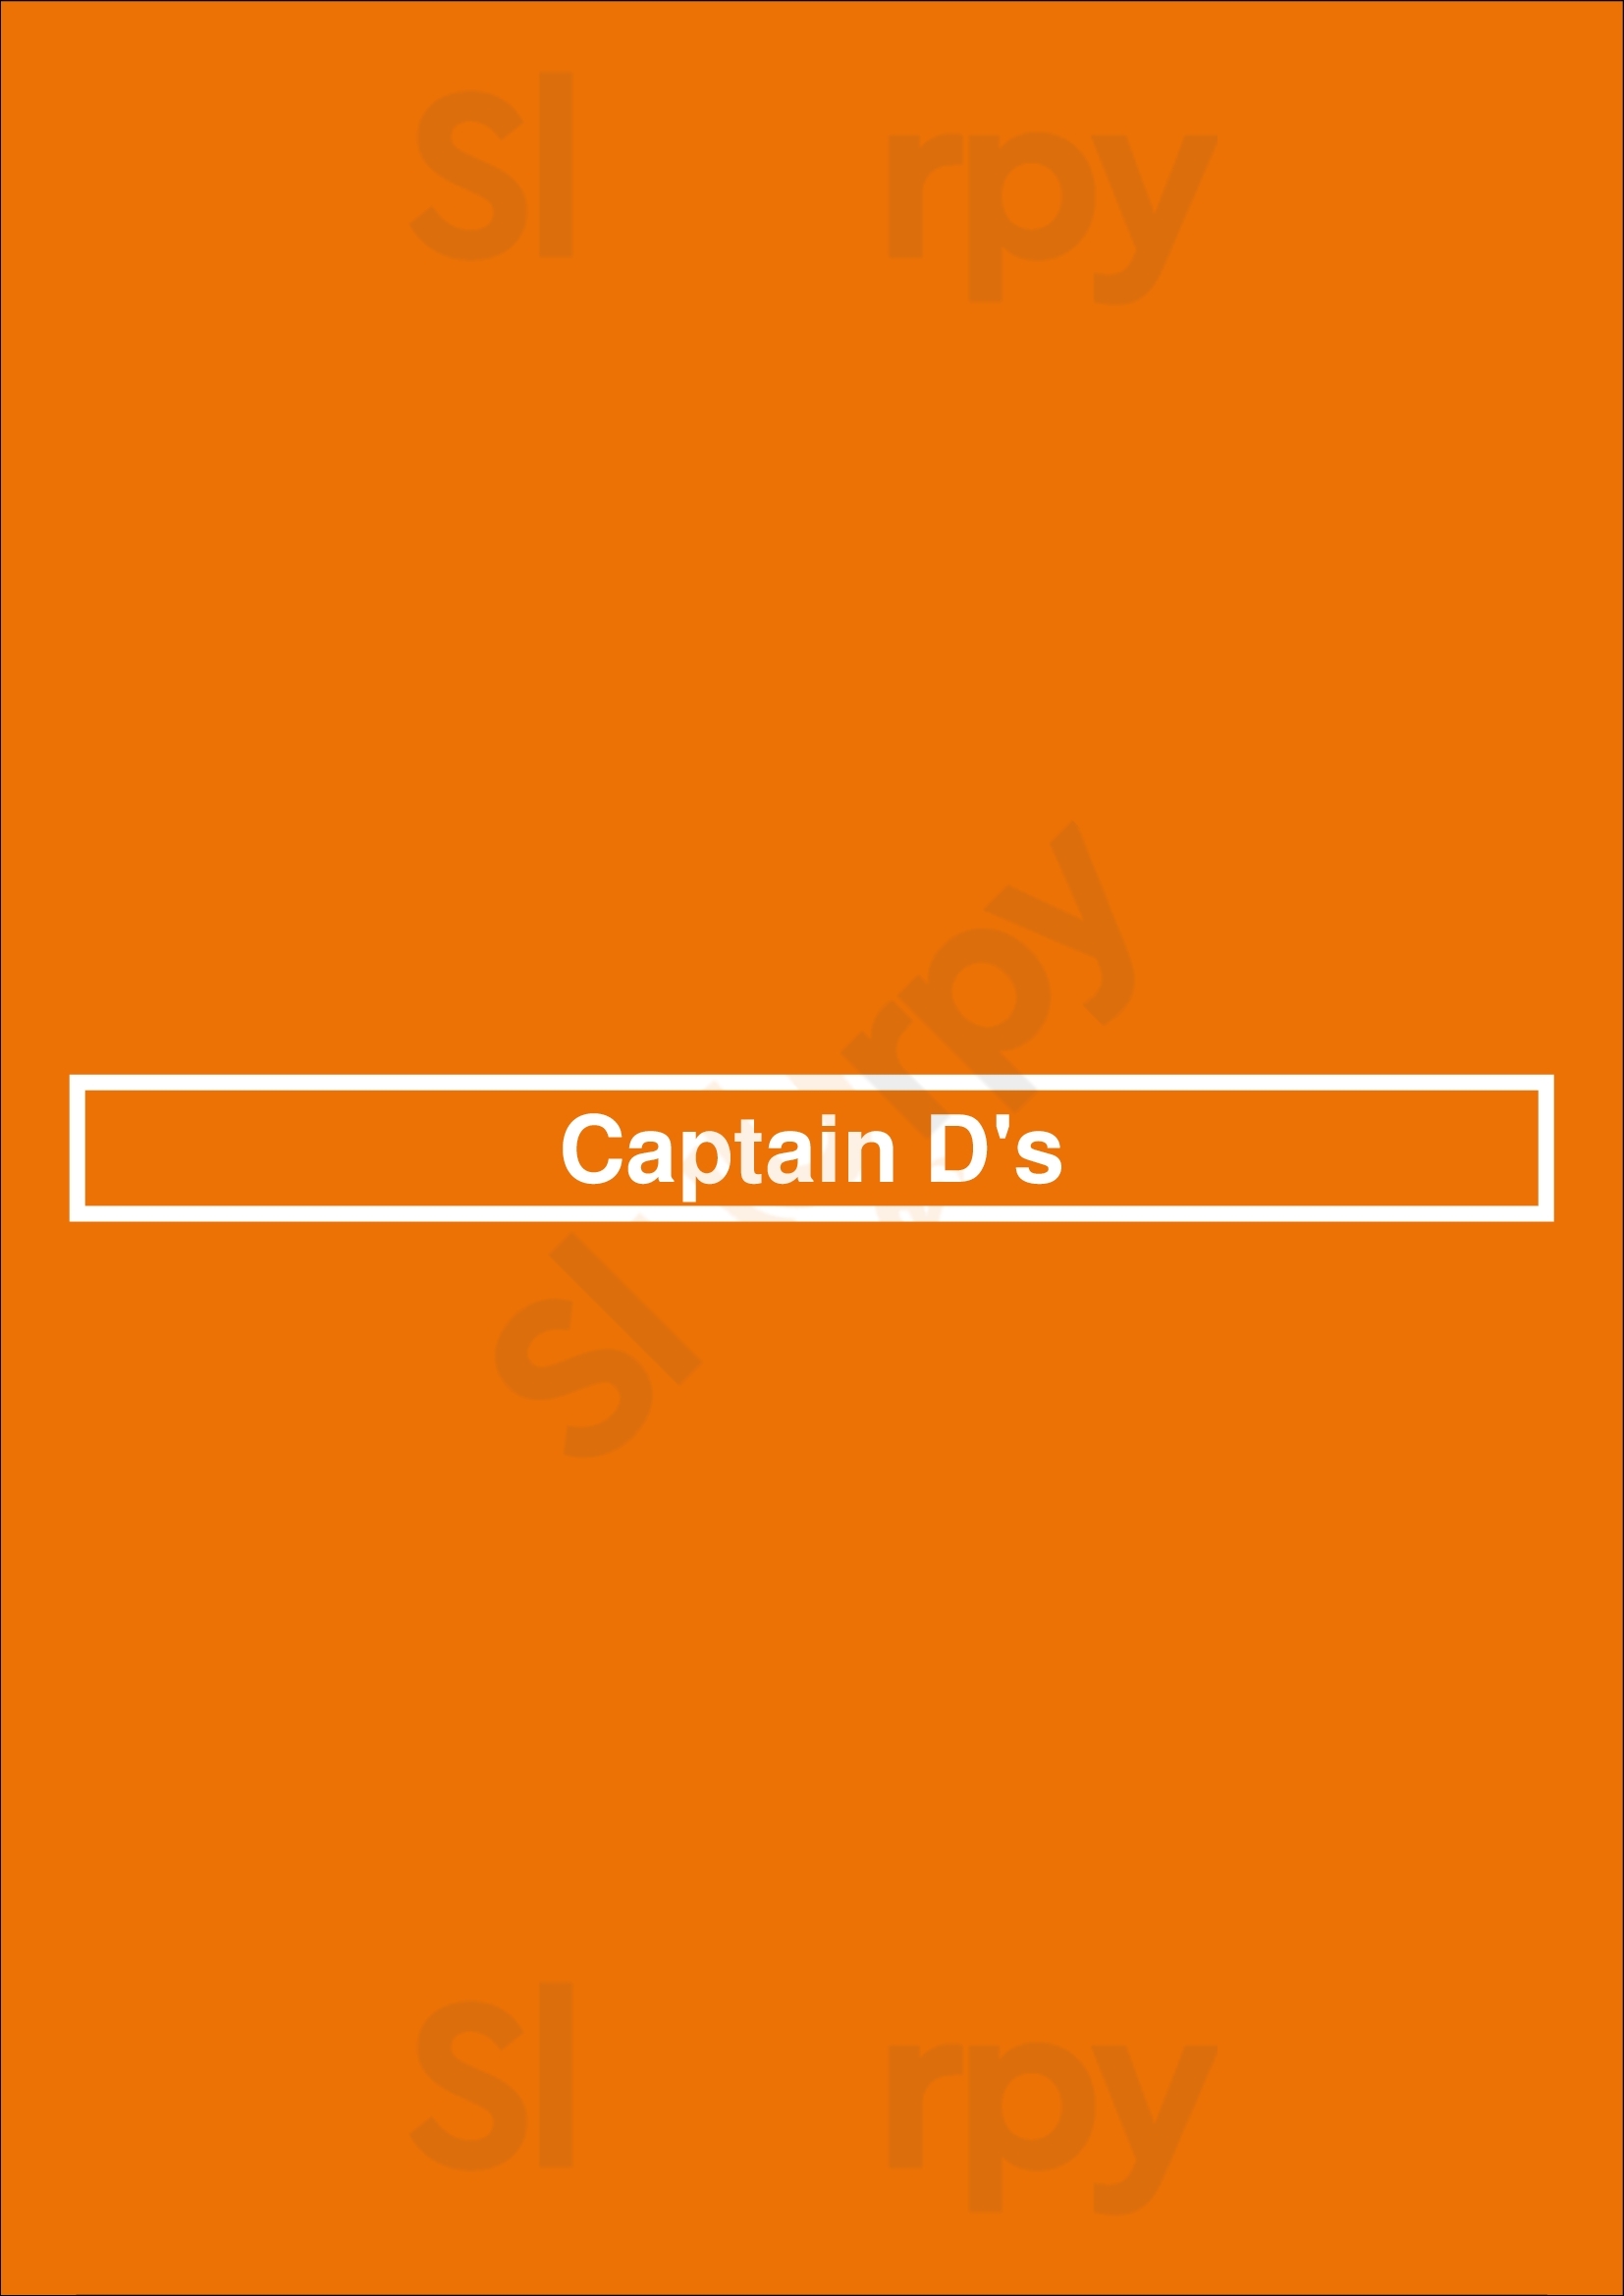 Captain D's Columbia Menu - 1